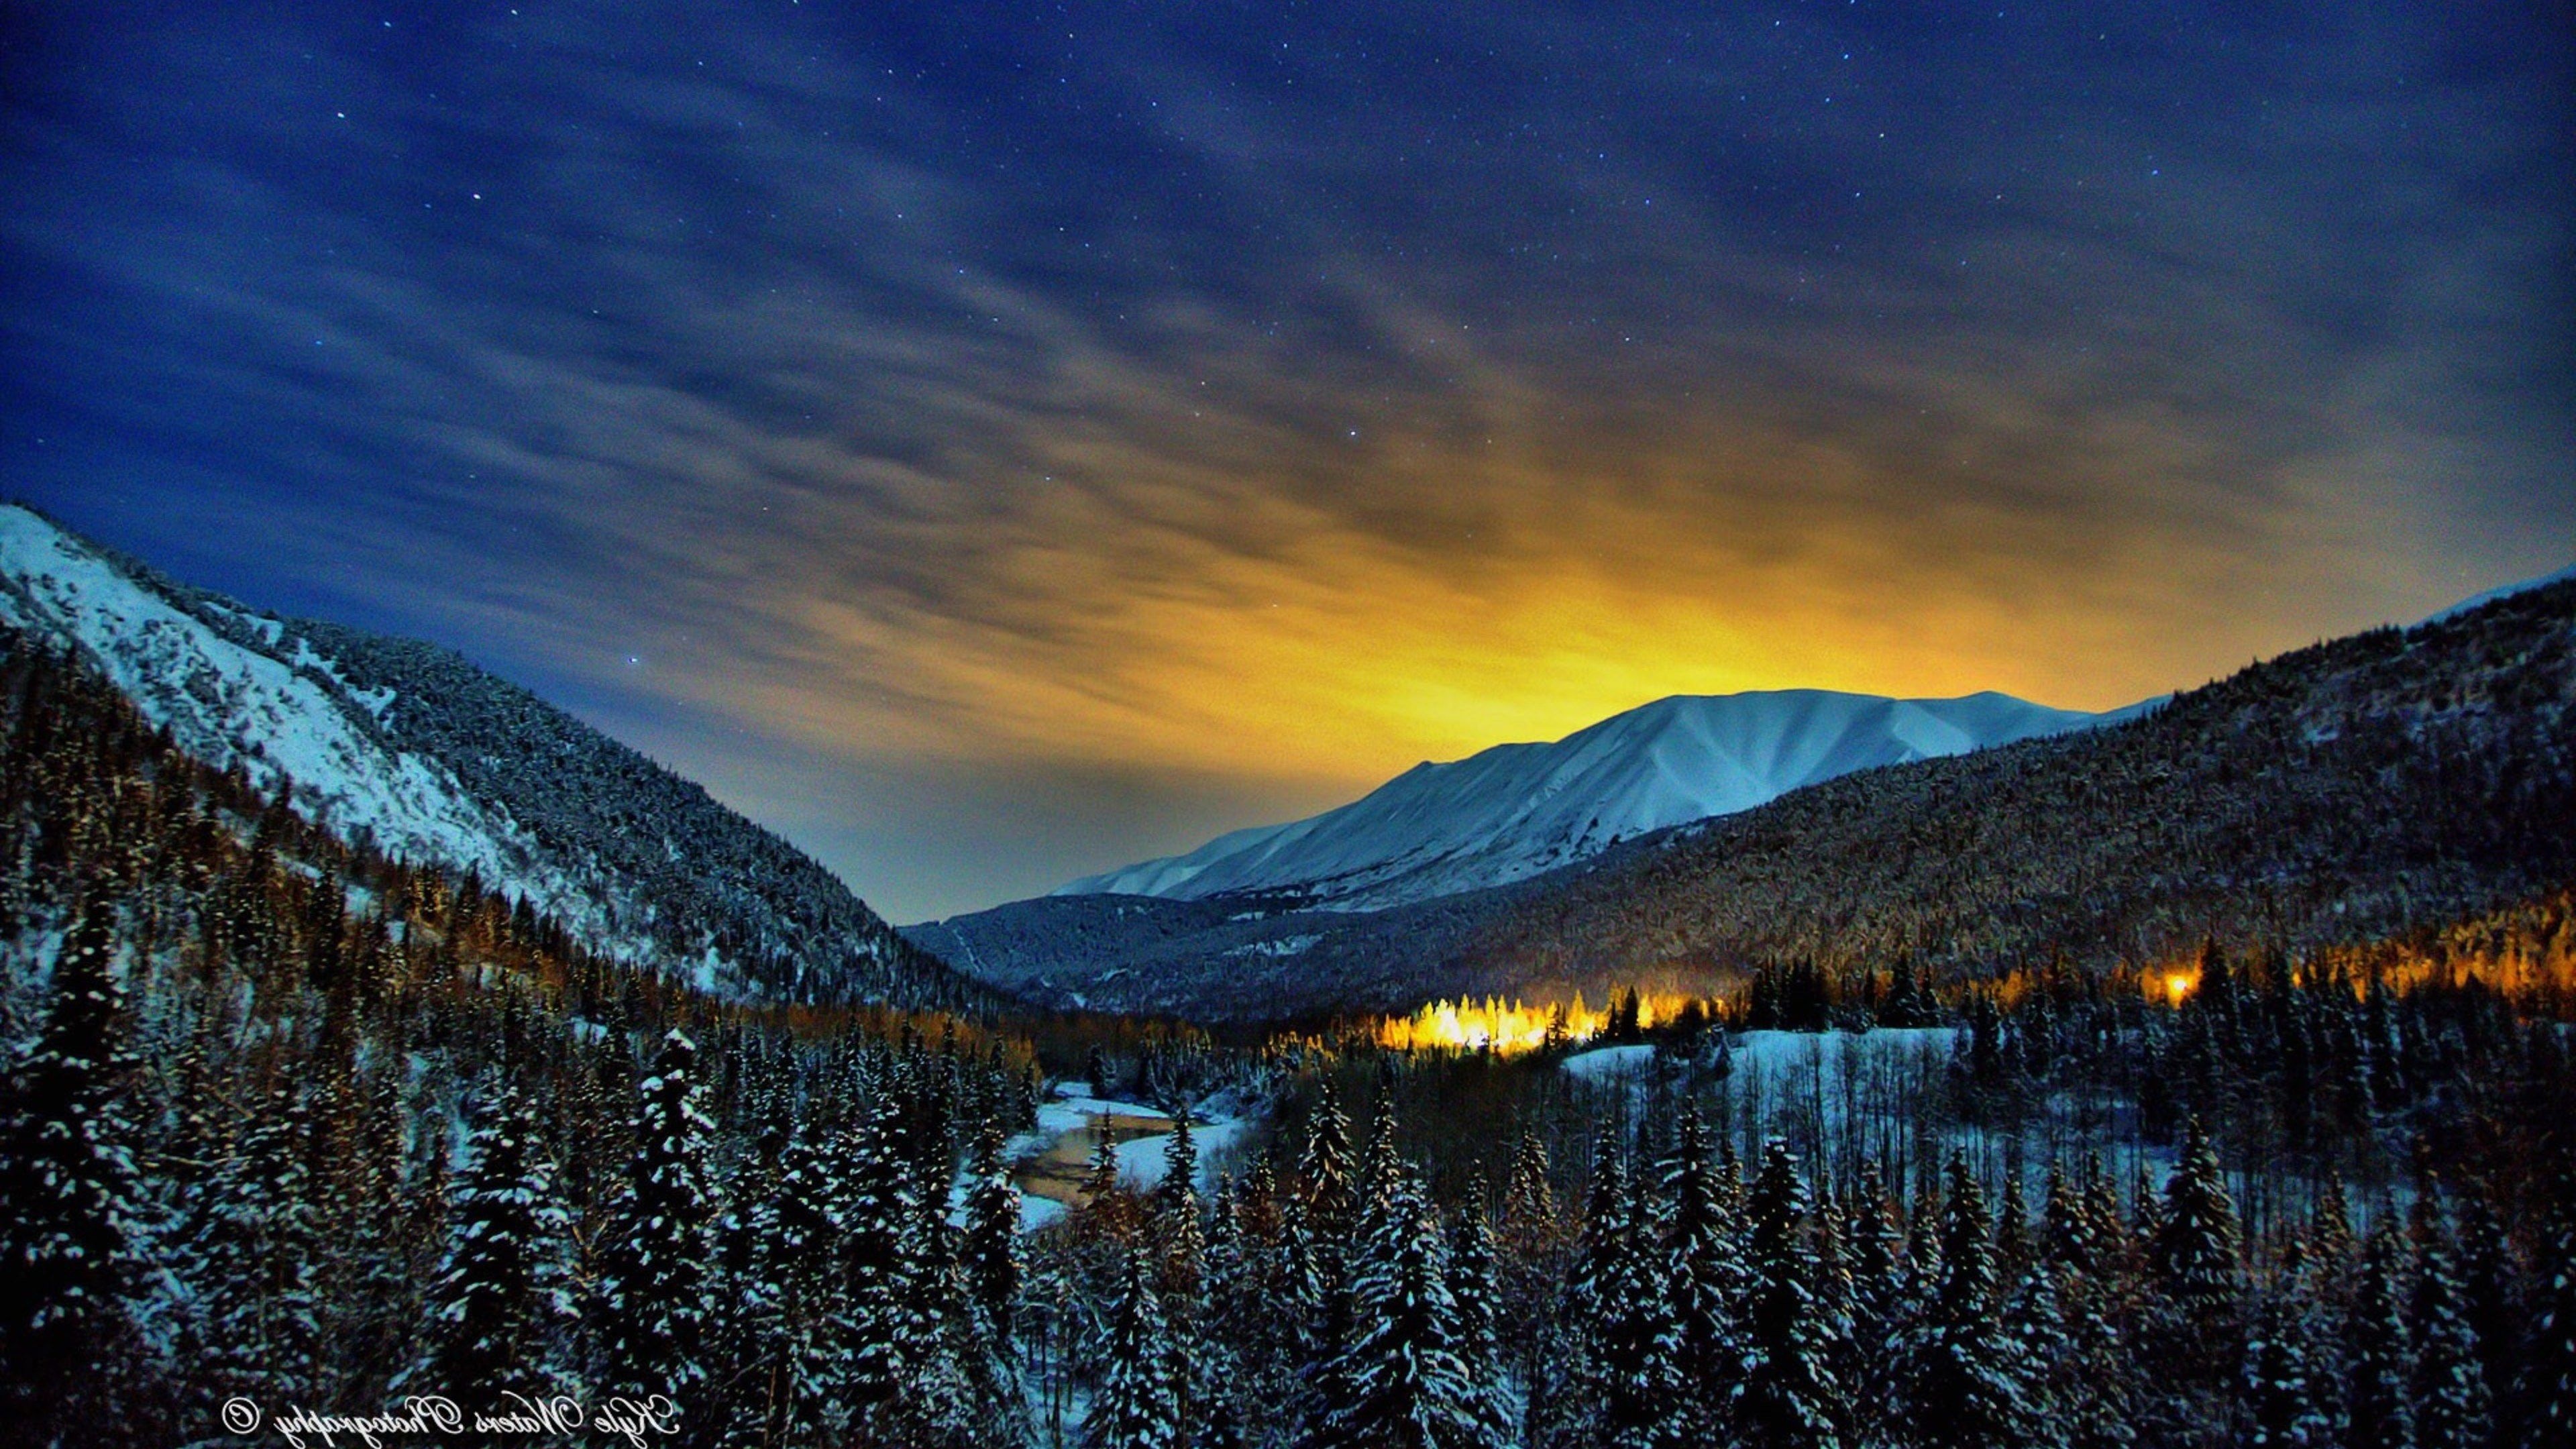 North America, Winter nature wallpapers, HD winter photos, Stunning backgrounds, 3840x2160 4K Desktop